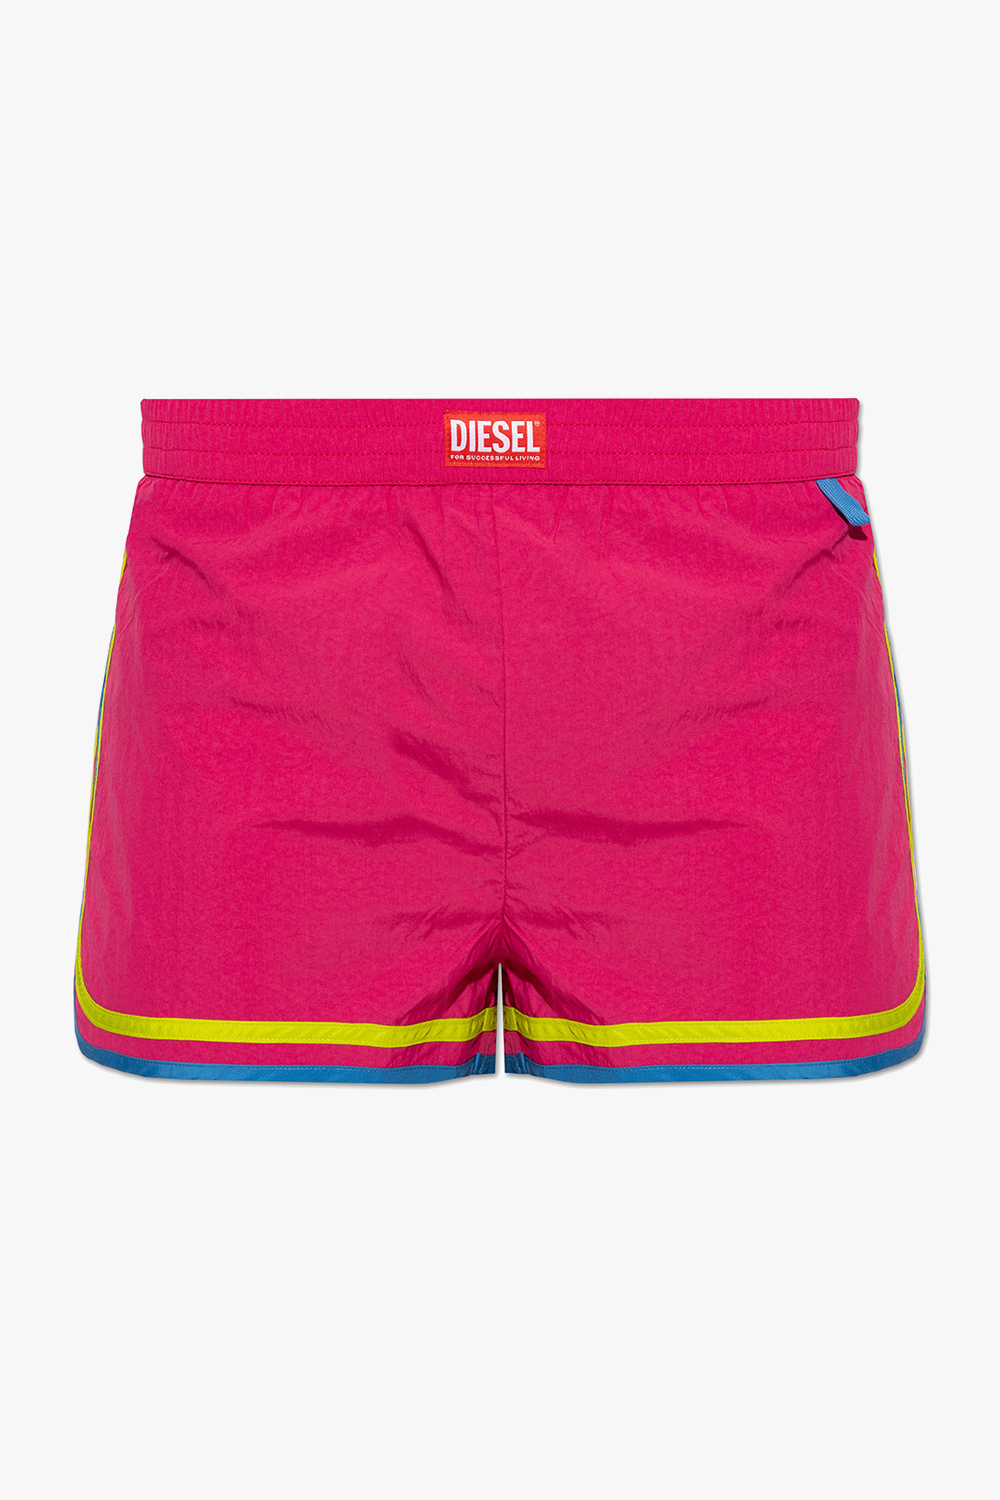 Diesel ‘Bmbx-Reef’ swim shorts